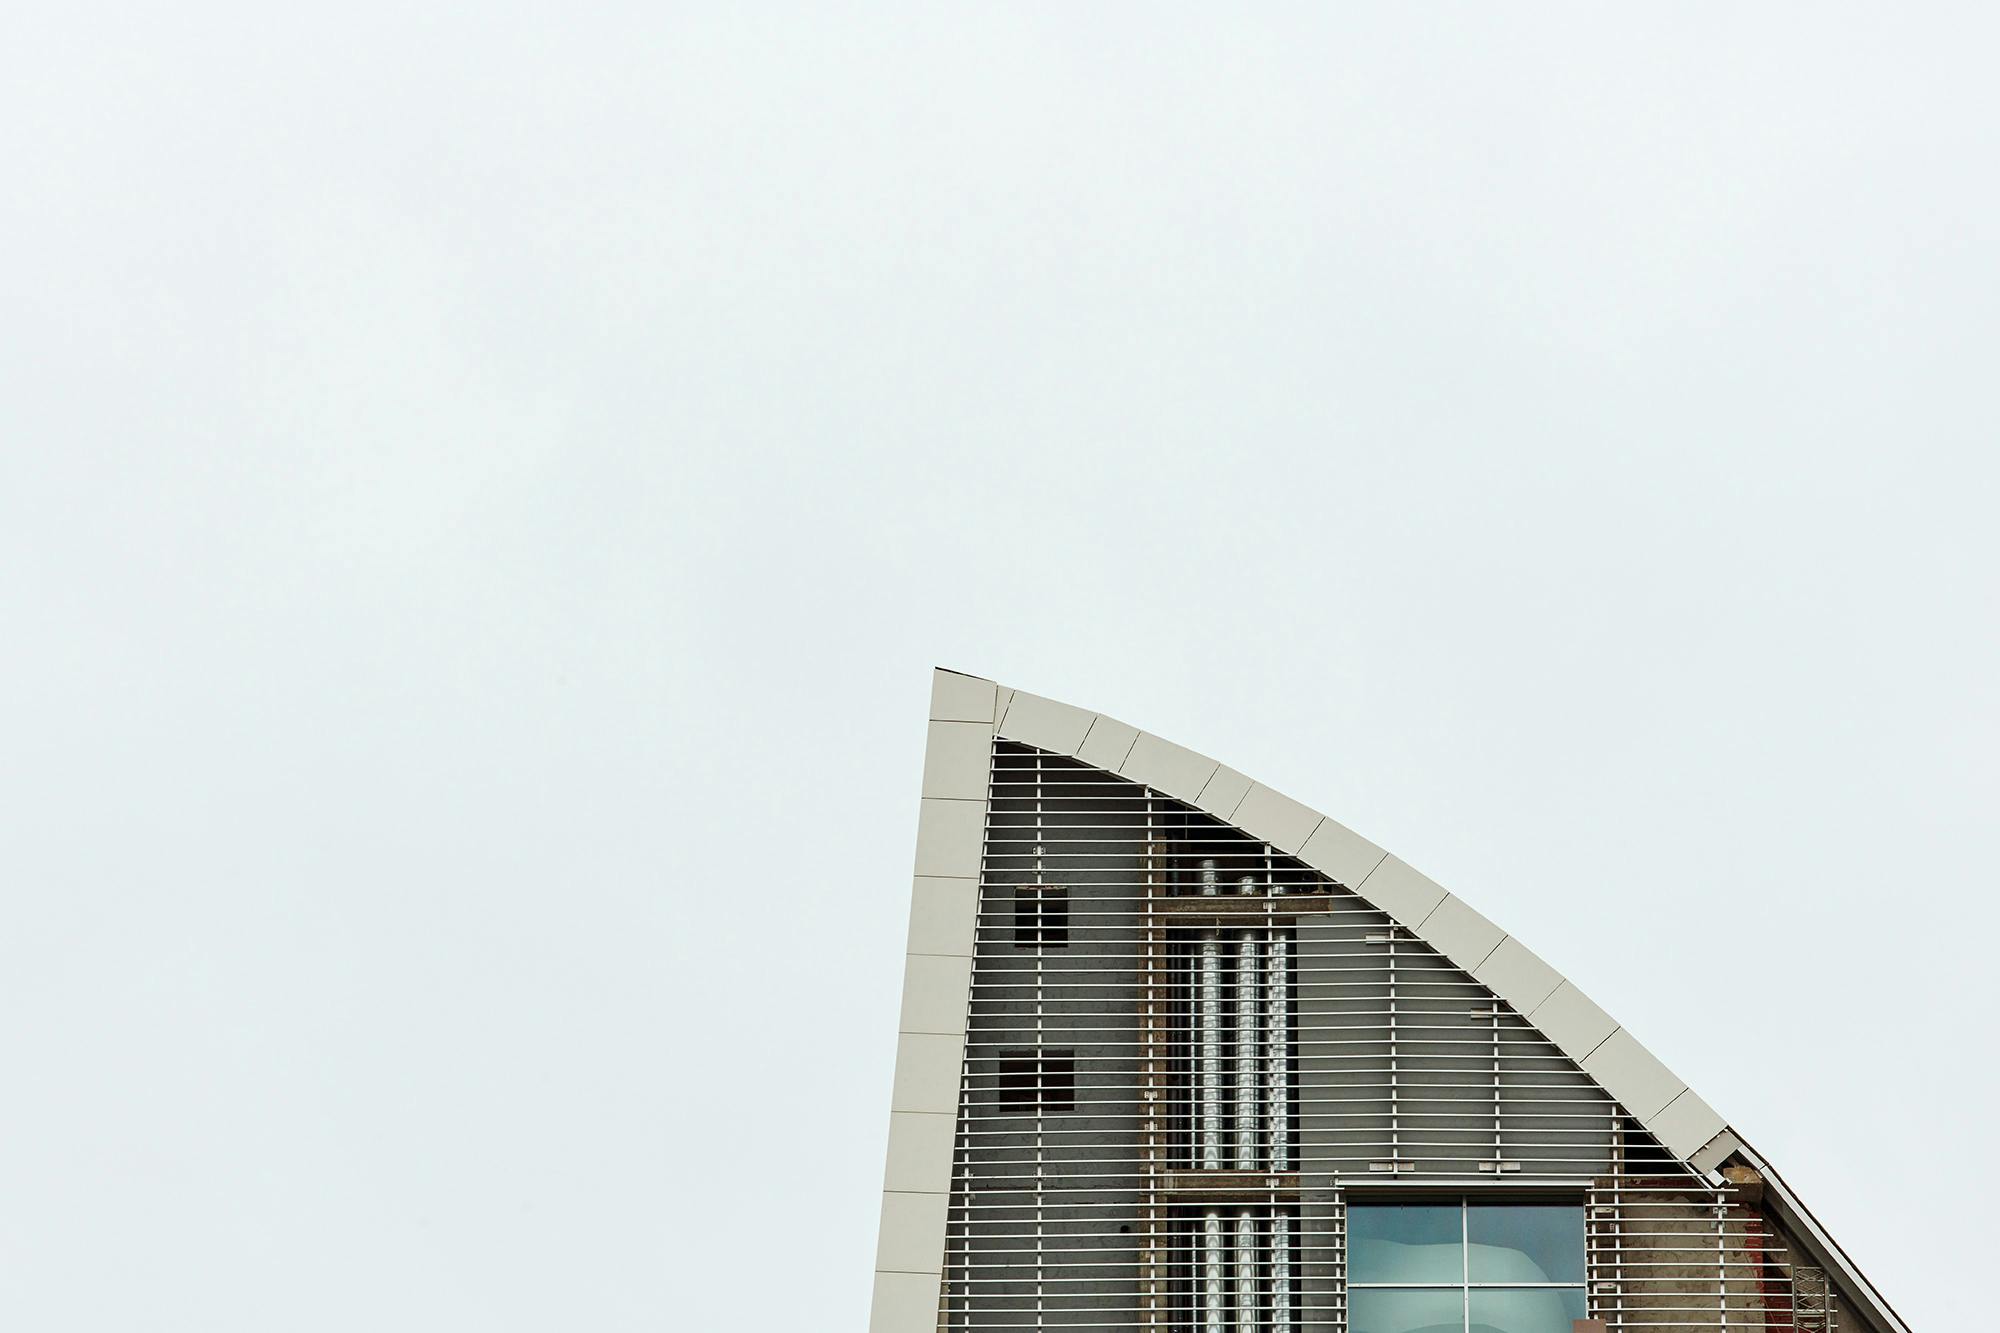 Numéro d'image 42 de la section actuelle de Dekton presents the world’s first curved and ventilated façade made of ultra-compact stone de Cosentino Canada